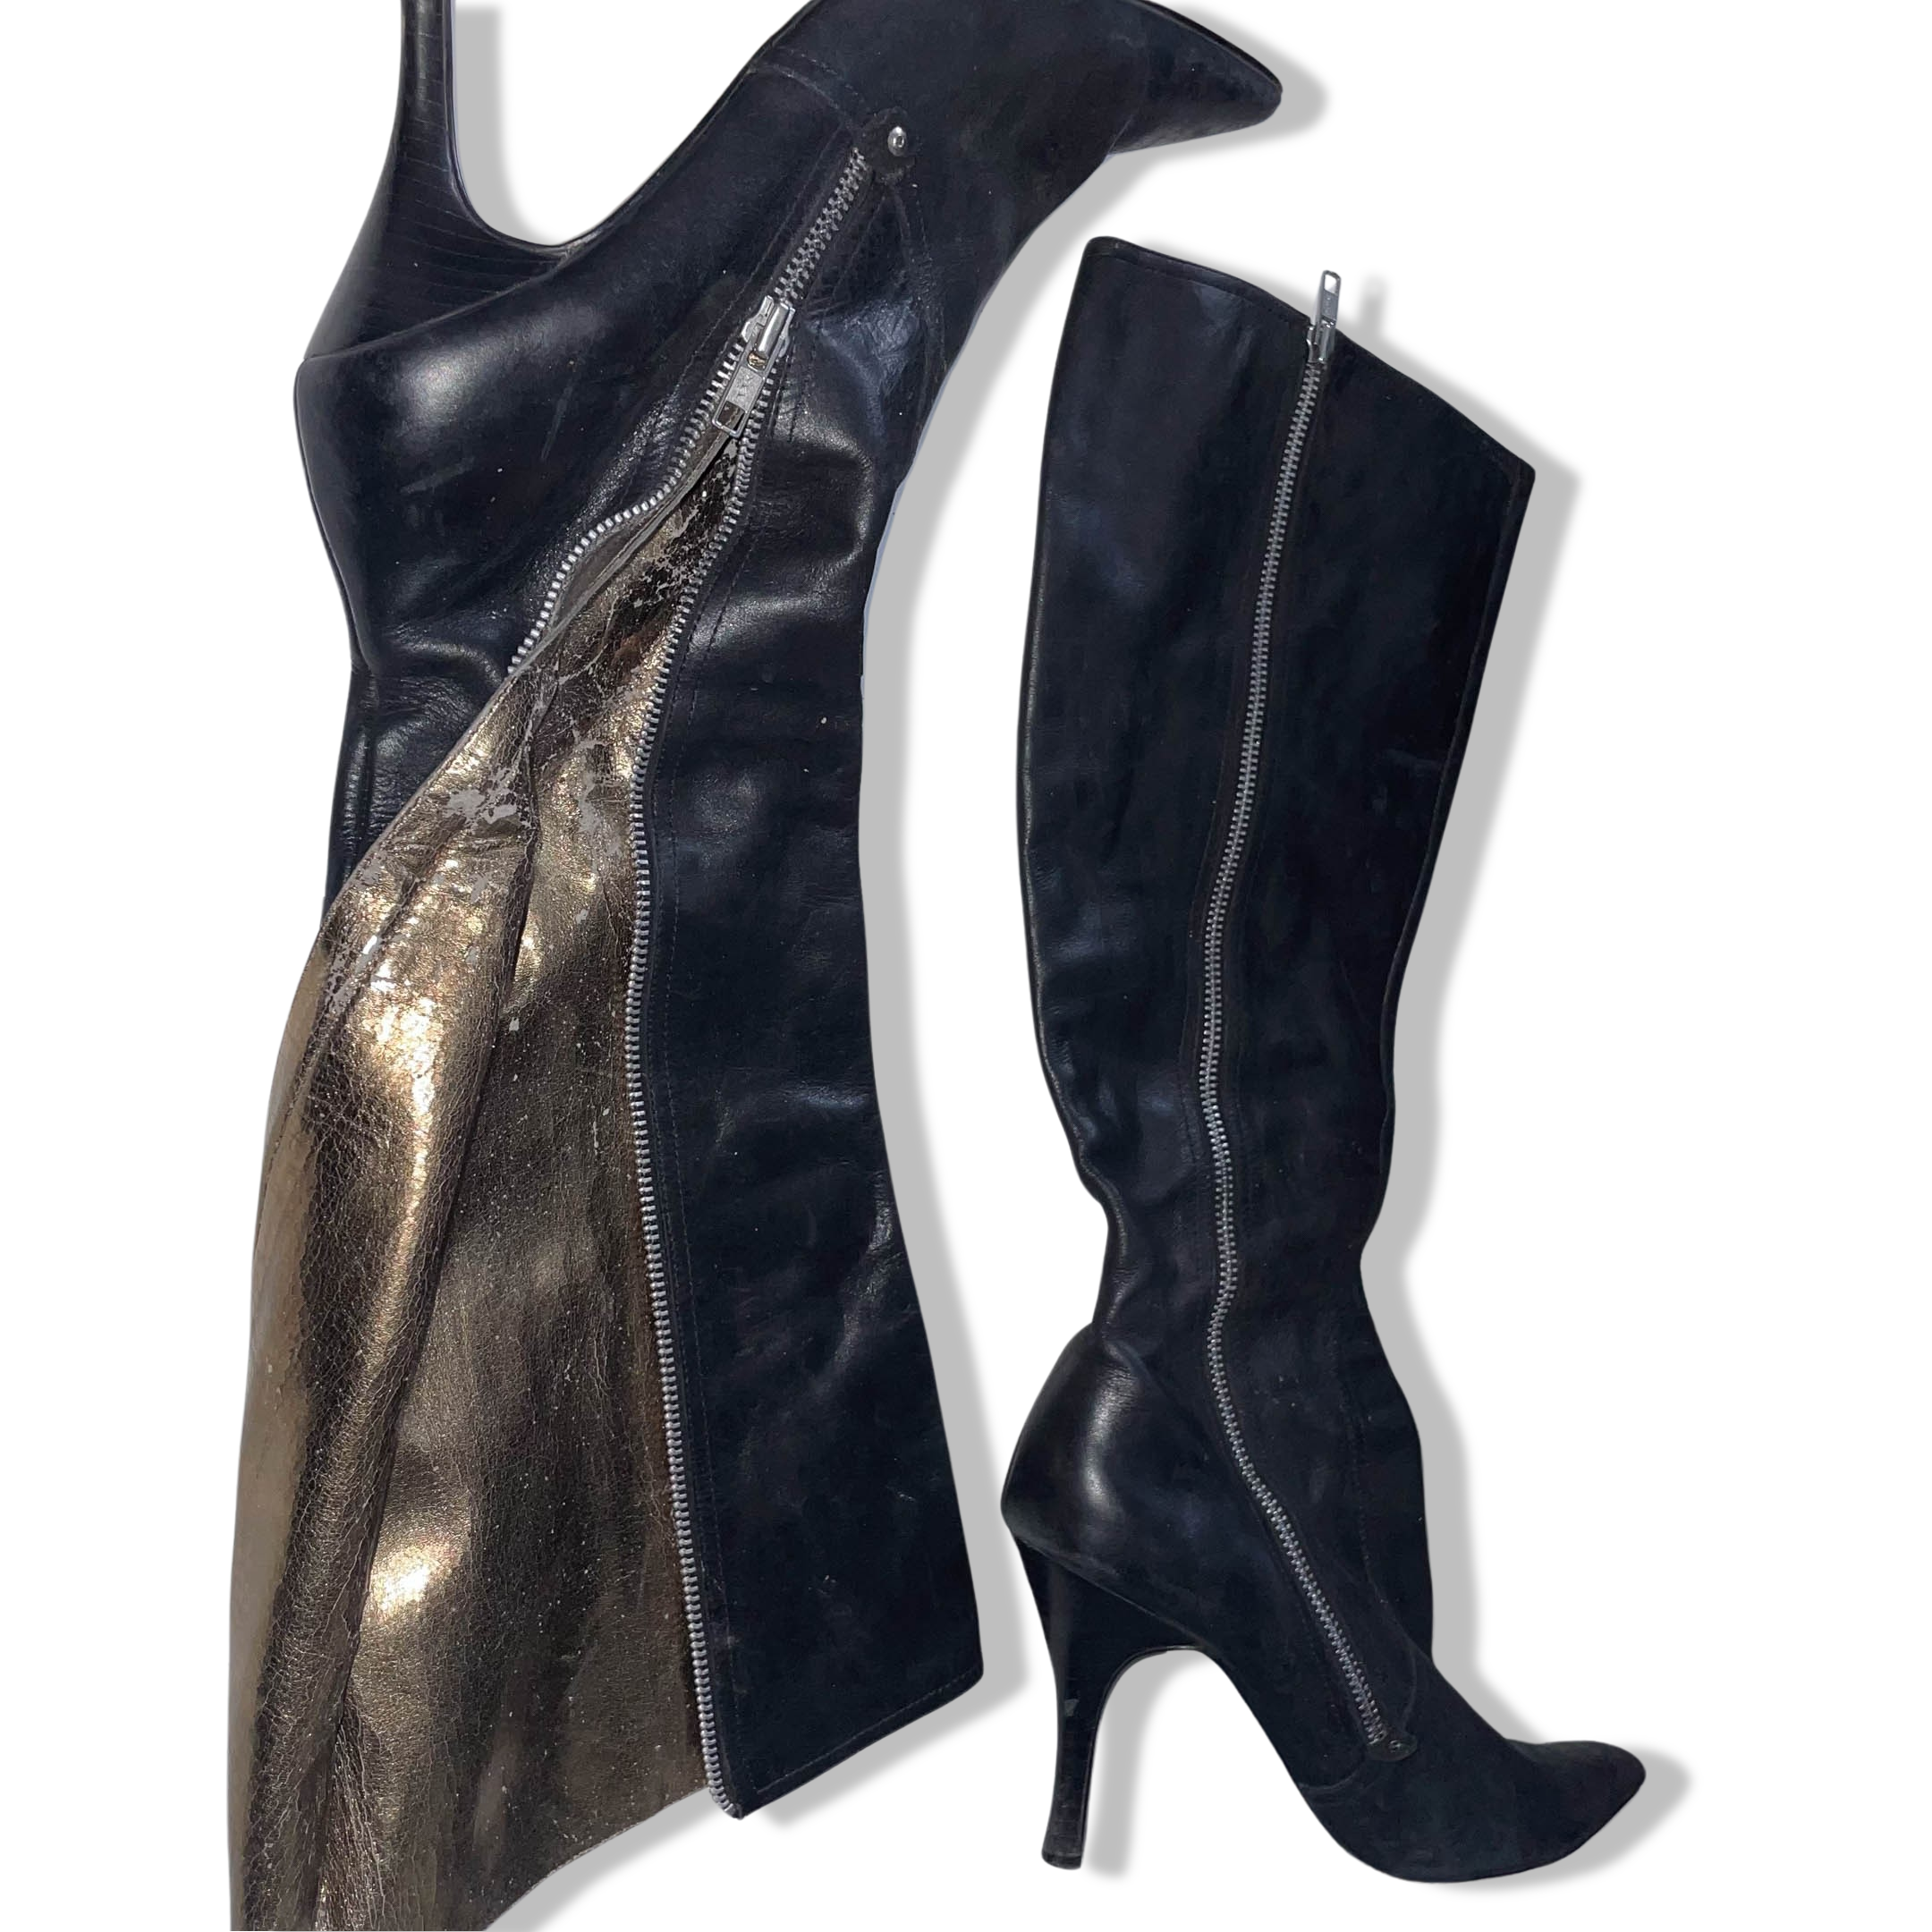 Vintage Female black leather side zip up high heel boot size 40